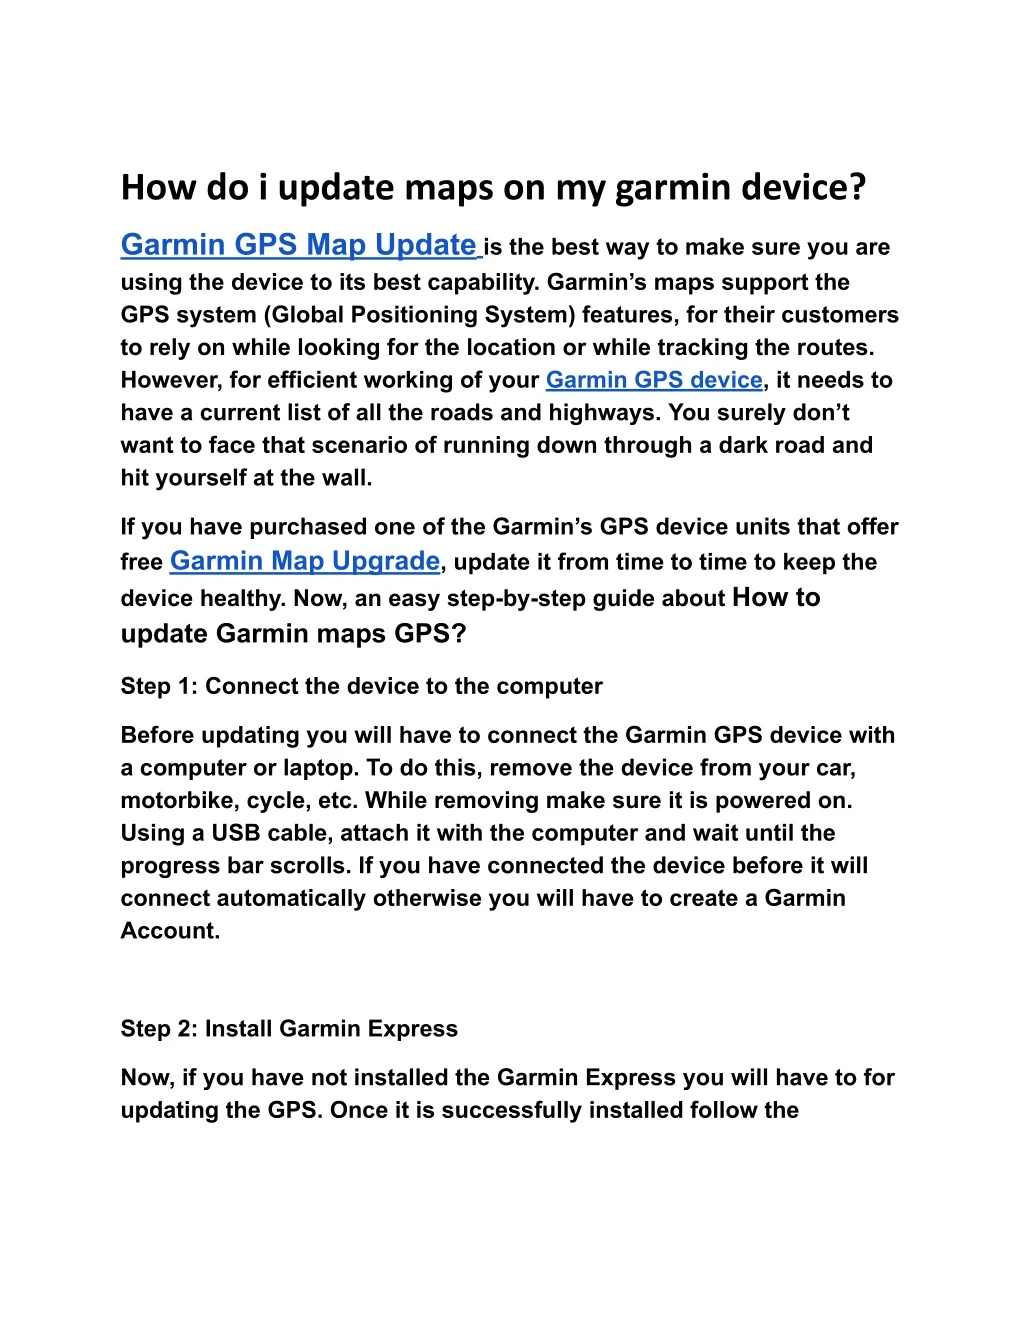 how do i update maps on my garmin device